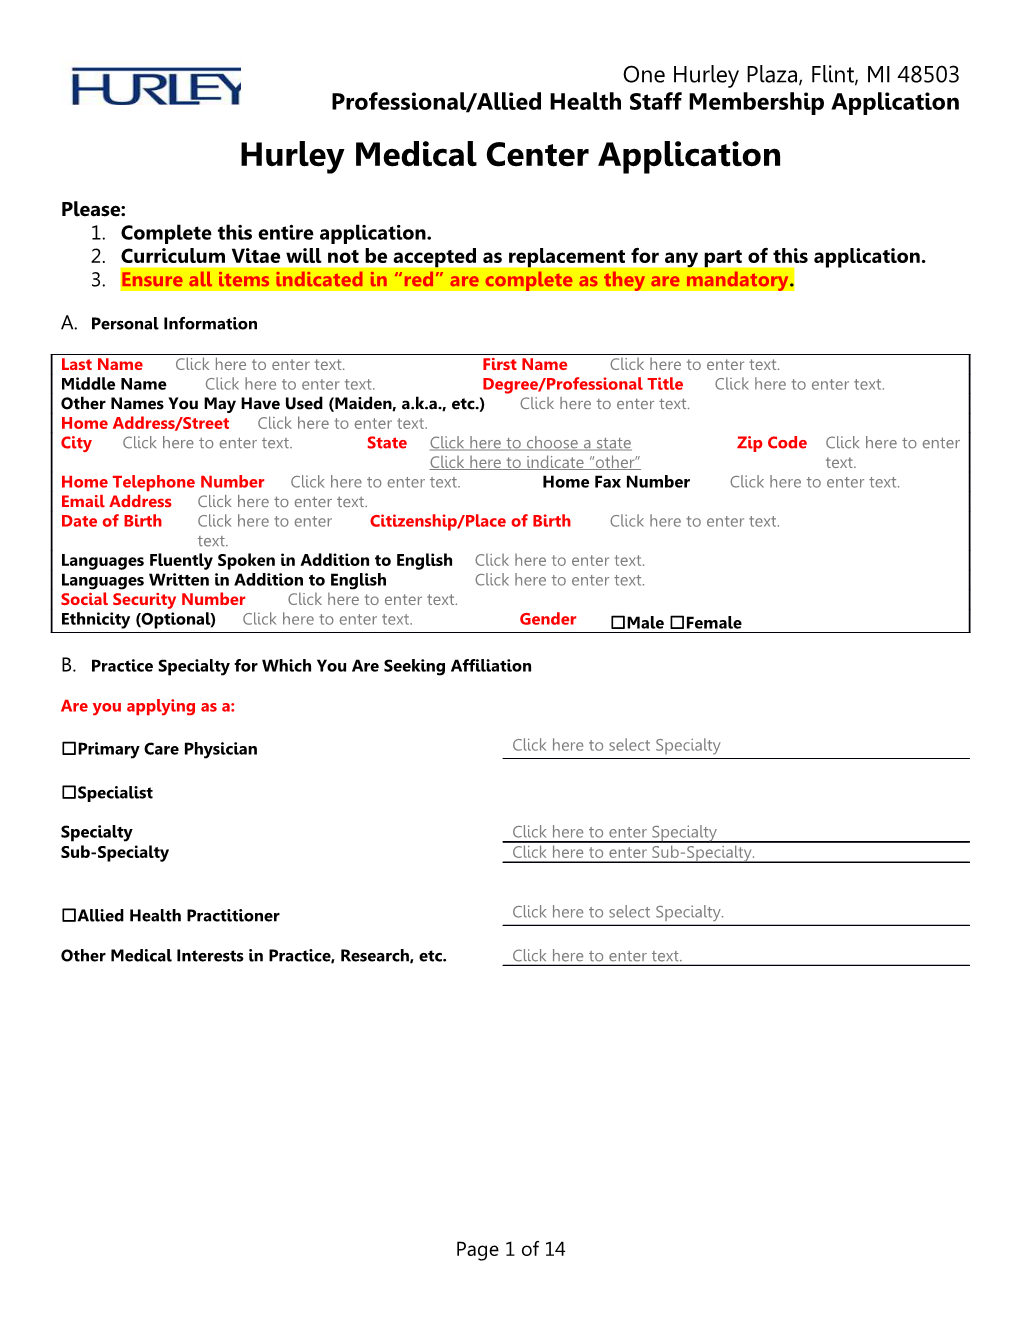 Professional/Allied Health Staff Membership Application